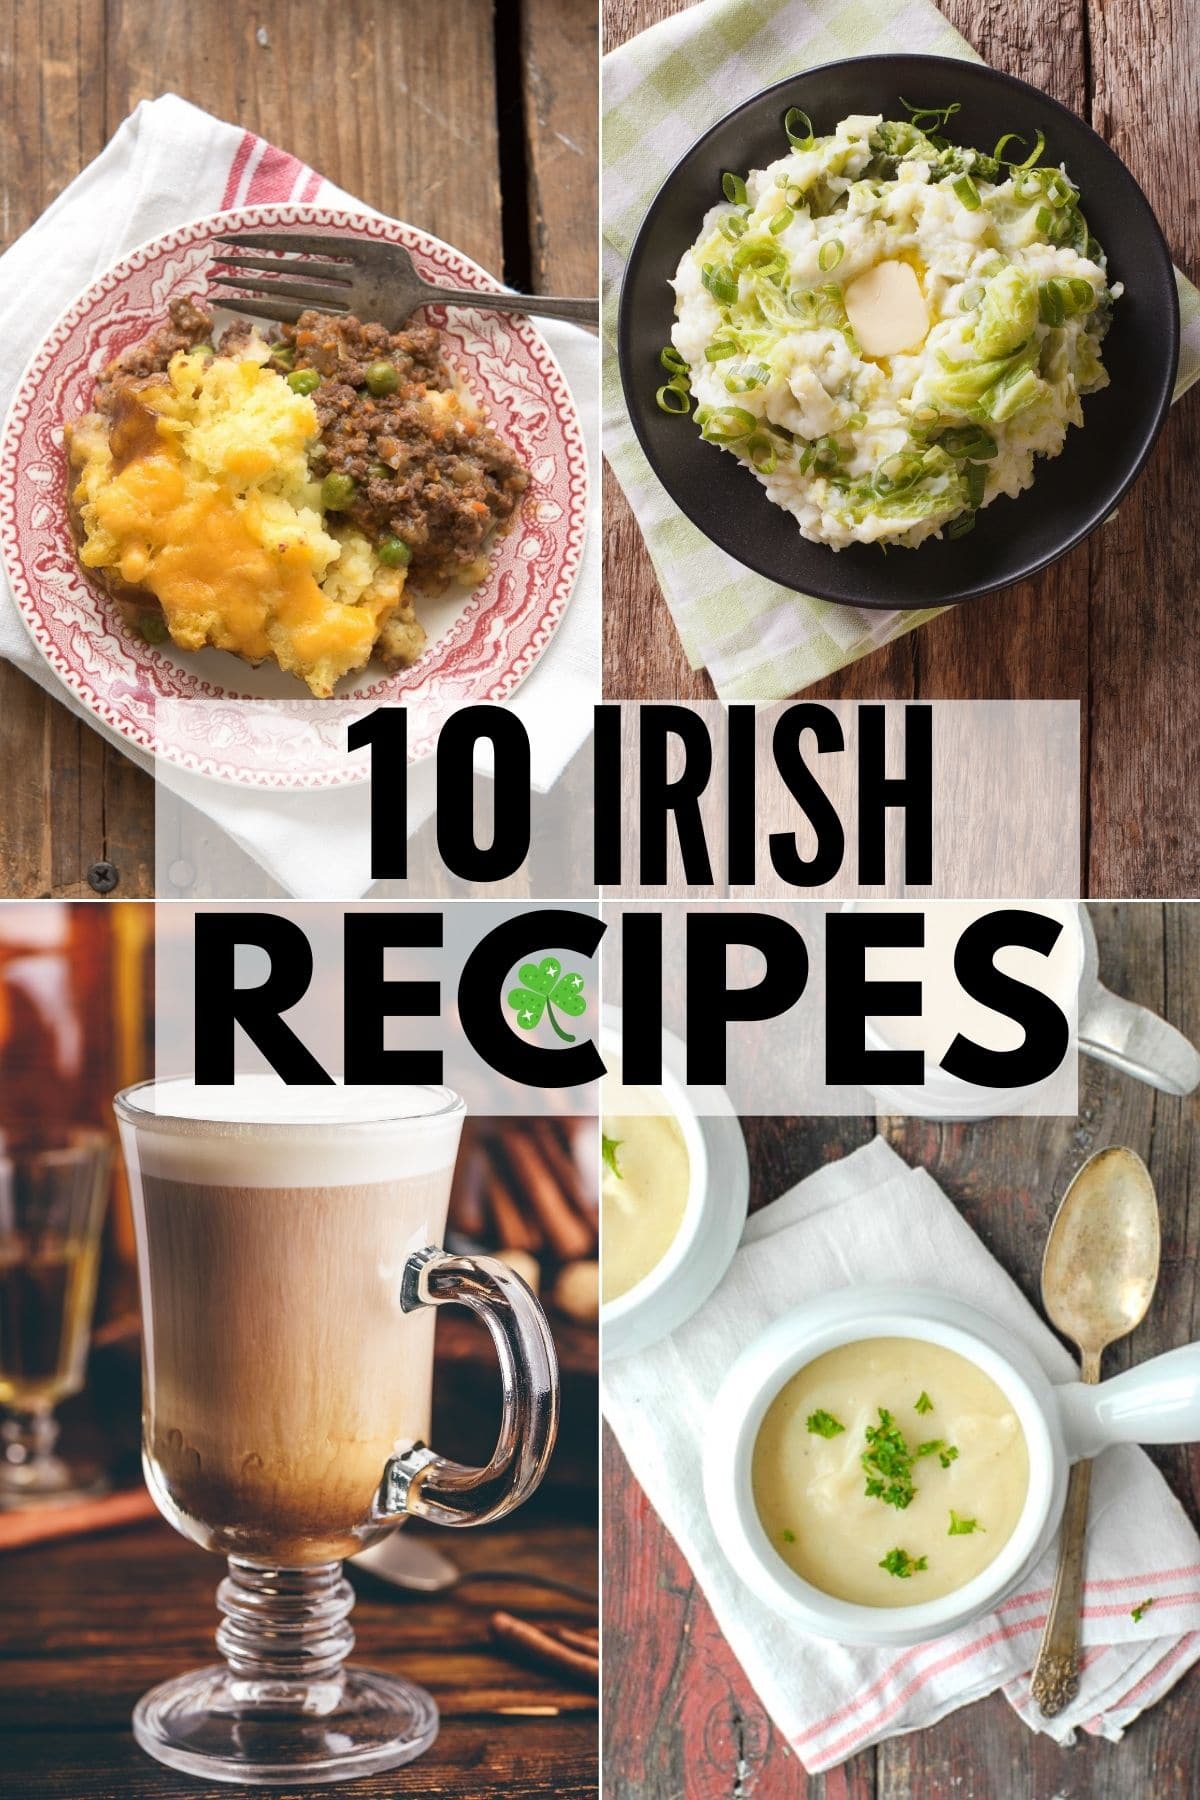 irish recipes photo collage